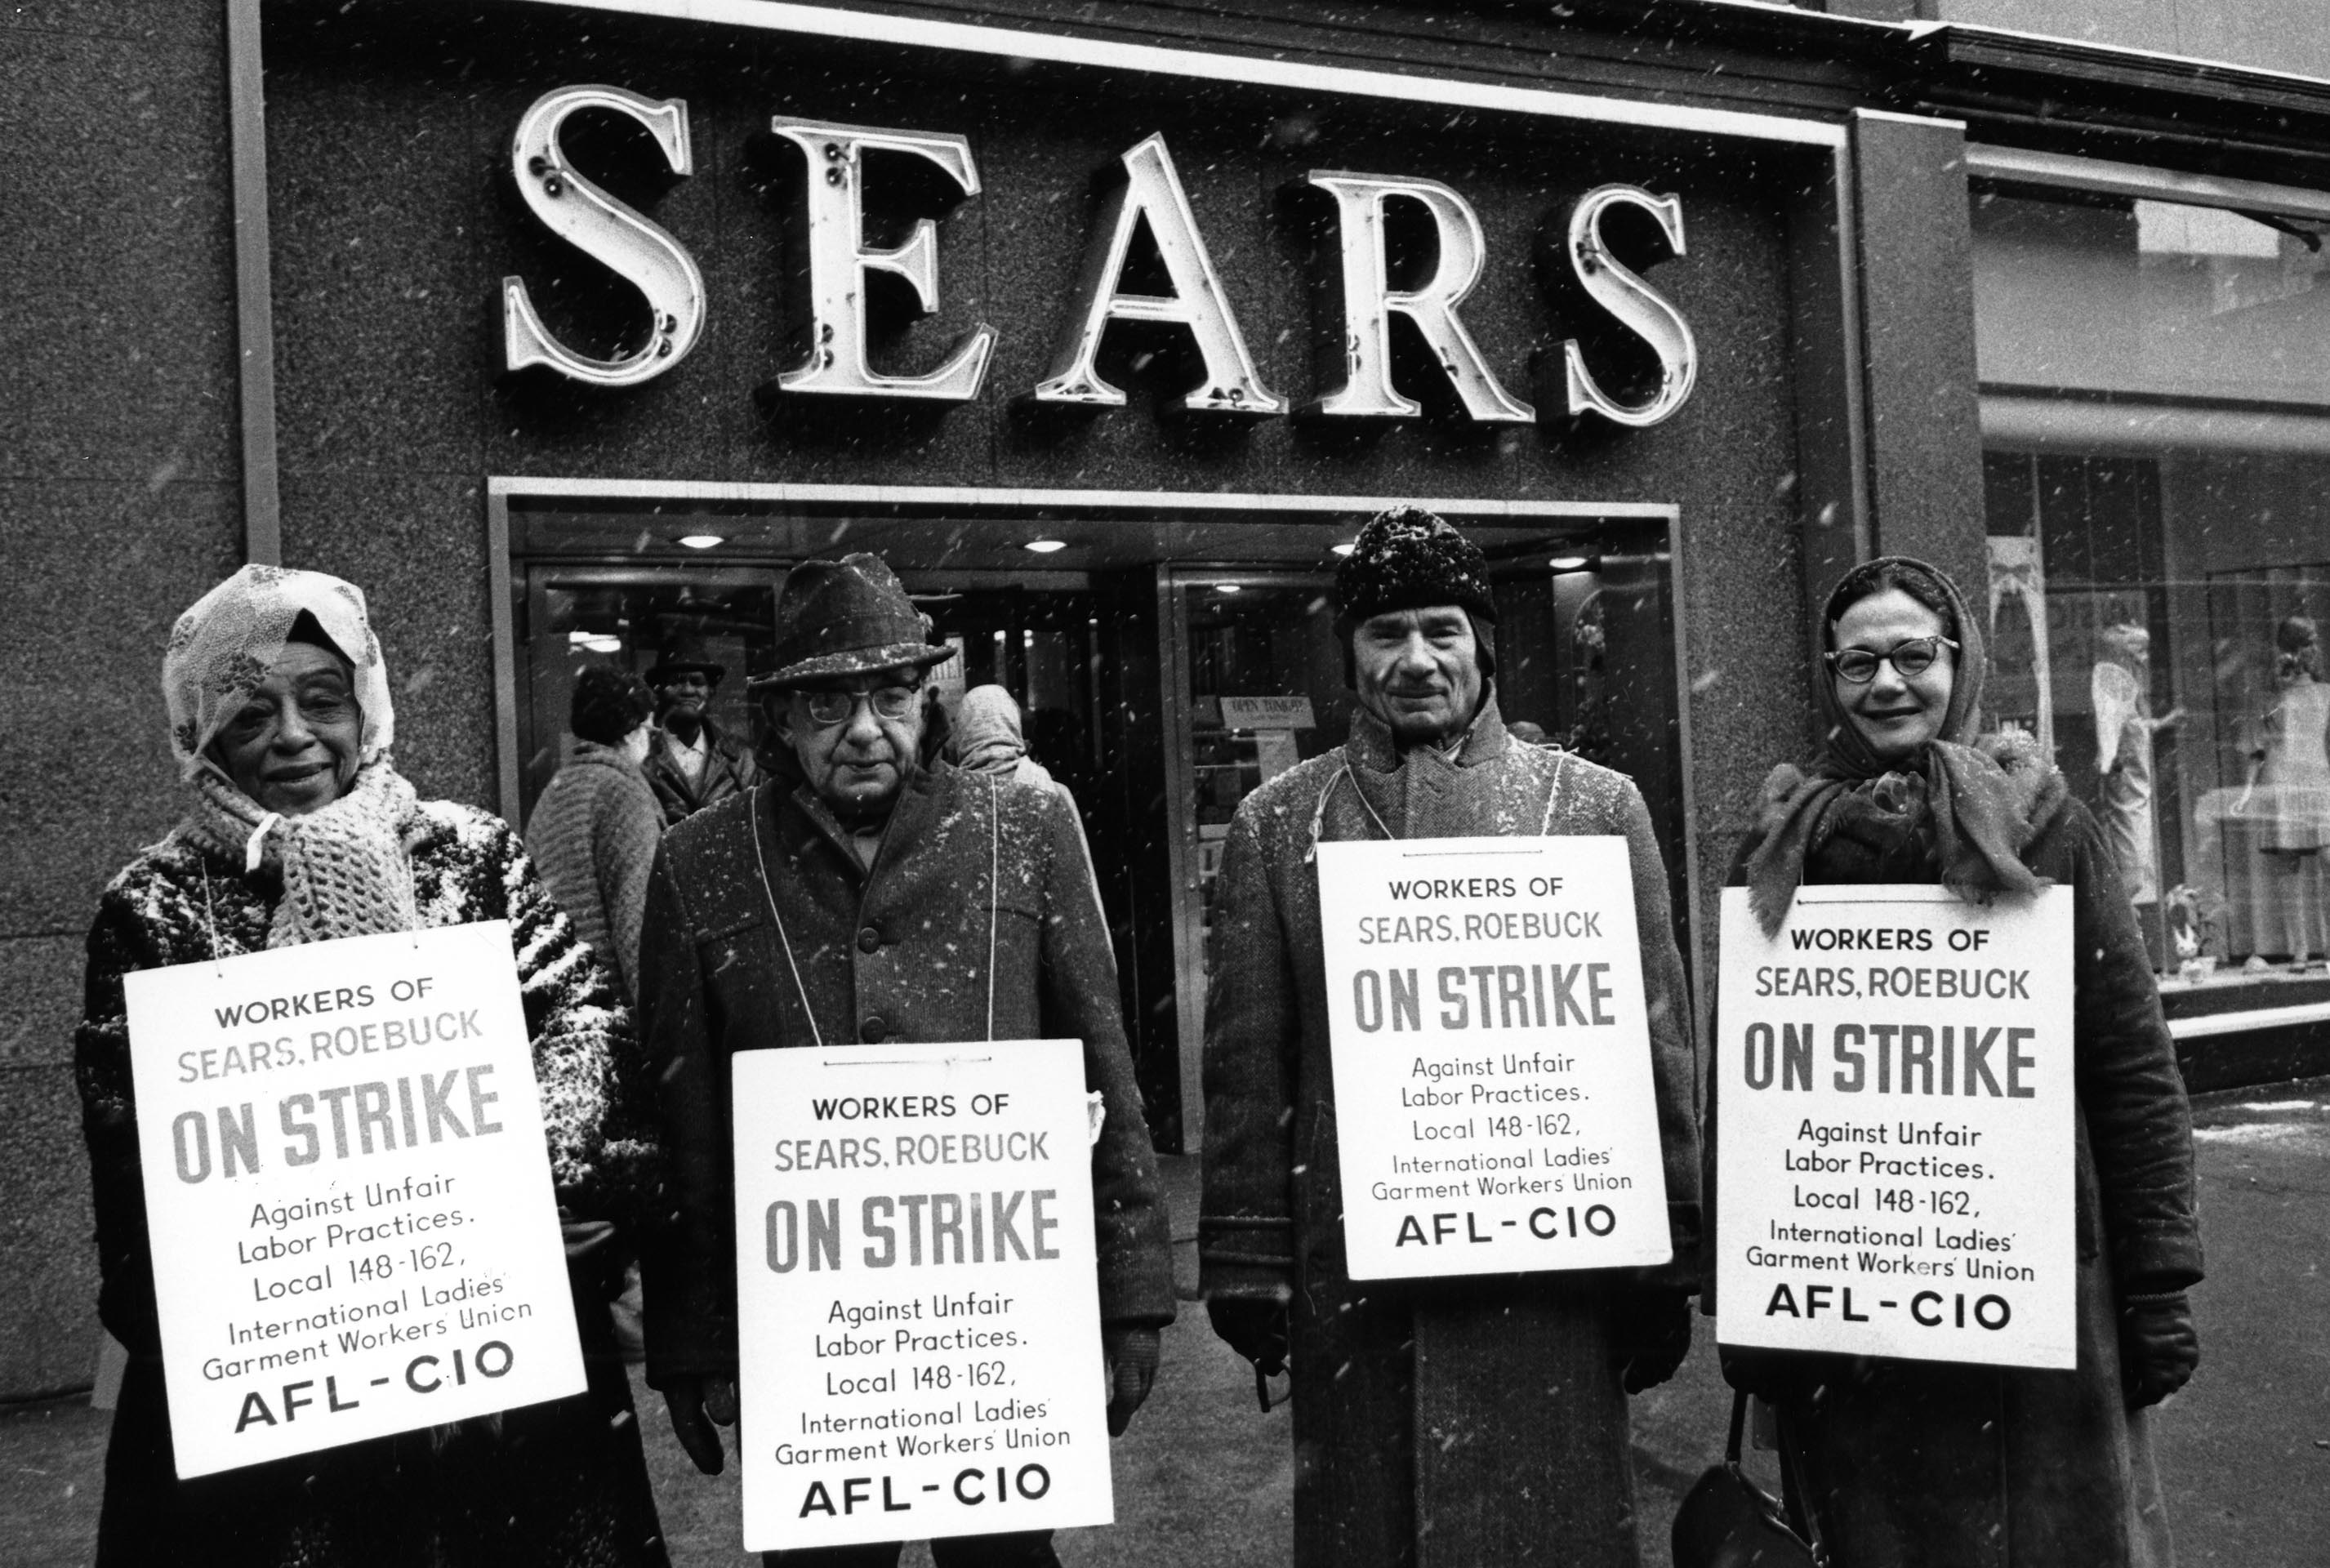 Sears Roebuck employees on strike.